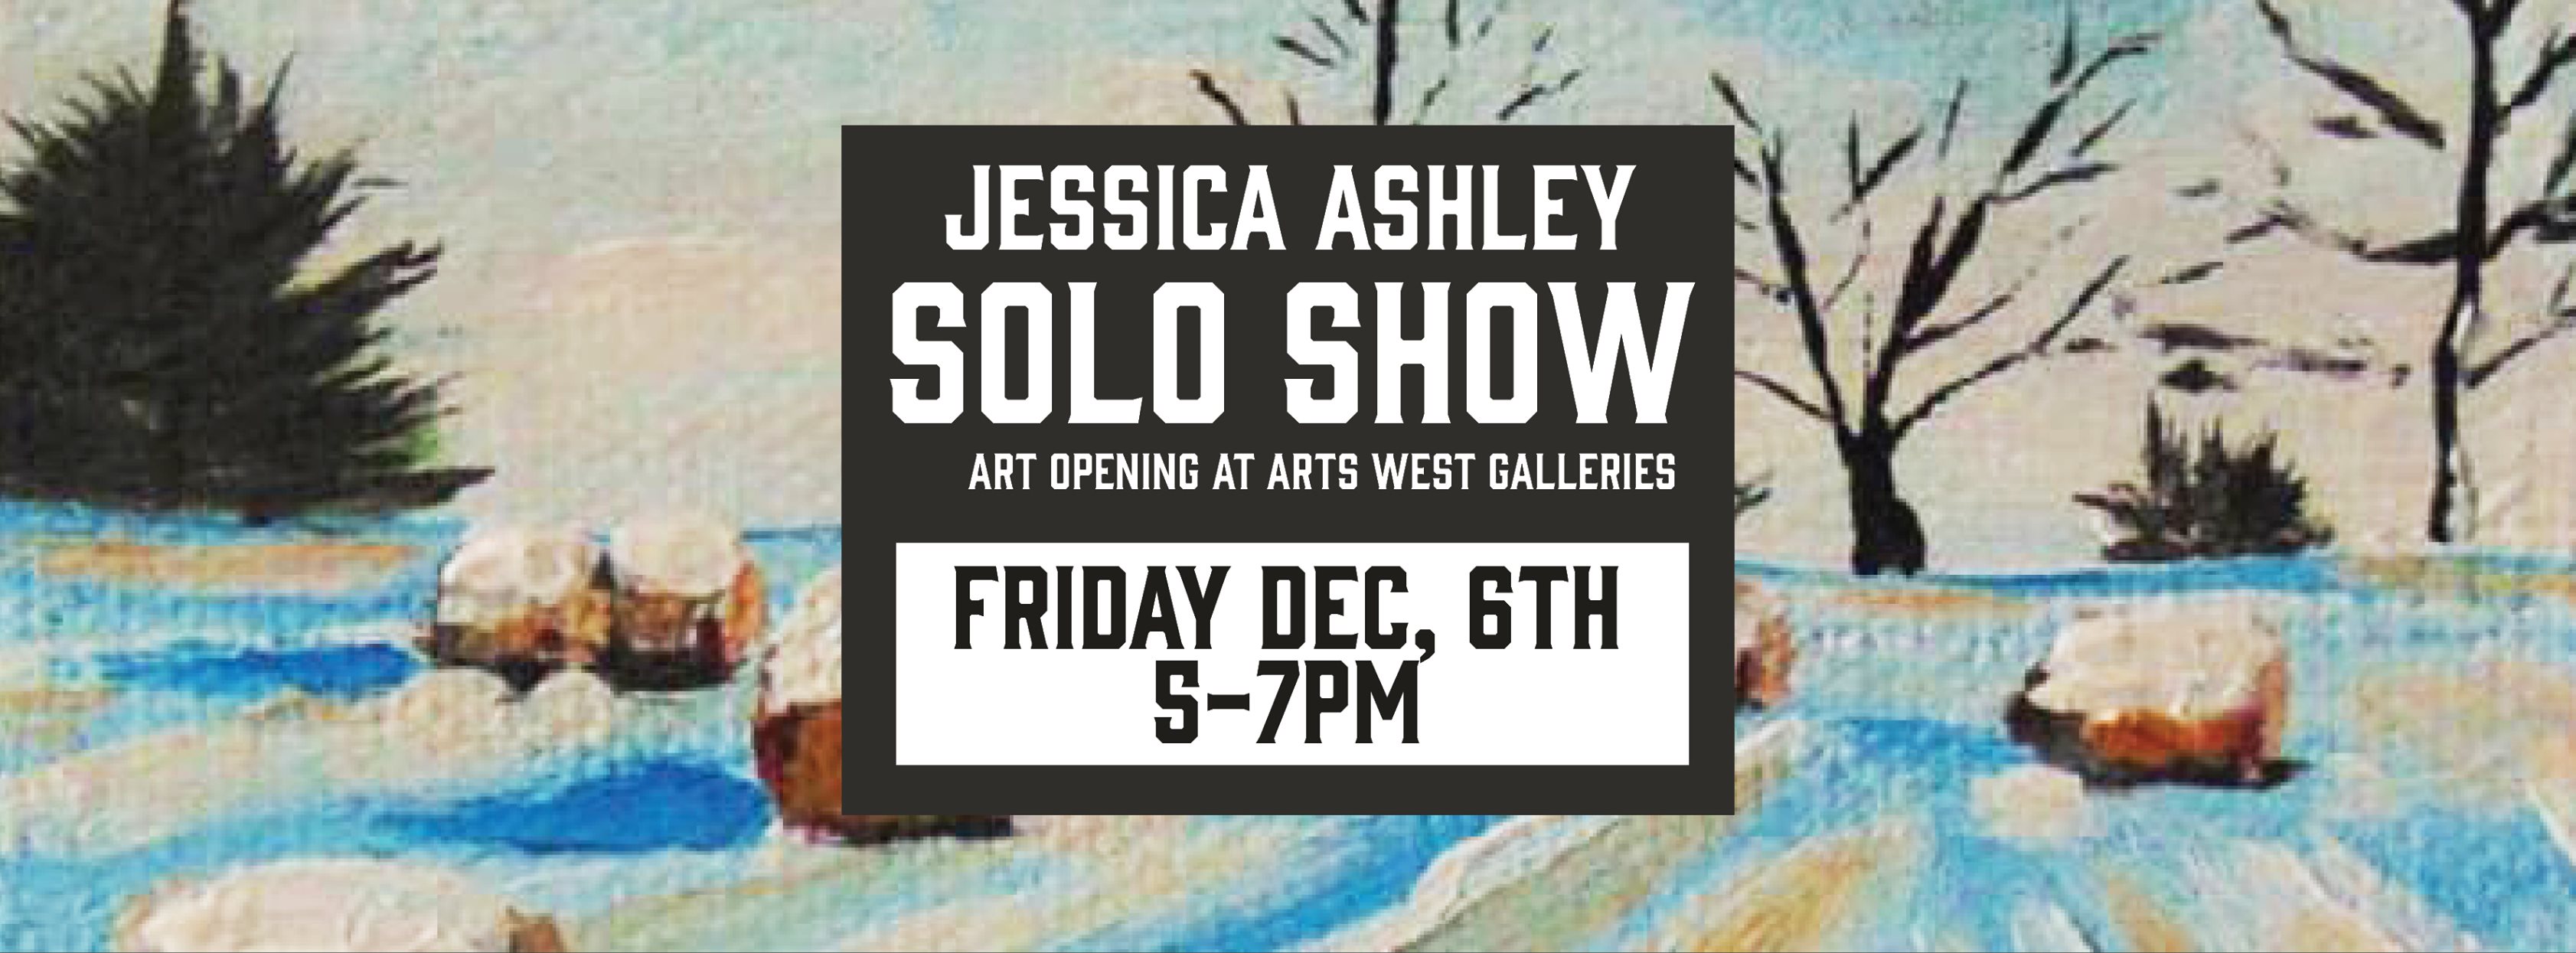 Jessica Ashley Solo Show flier